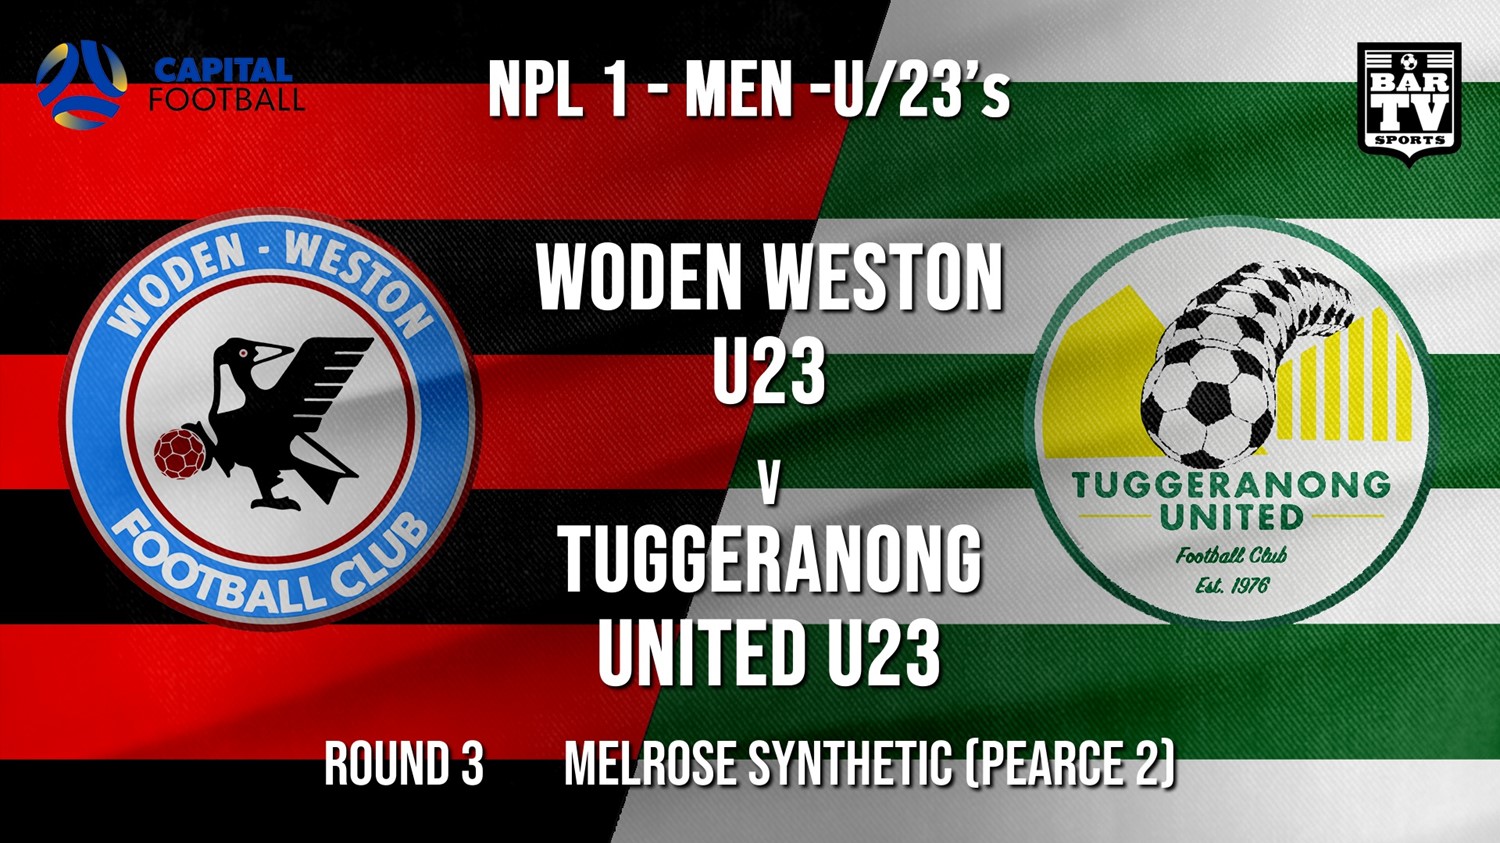 NPL1 Men - U23 - Capital Football  Round 3 - Woden Weston U23 v Tuggeranong United U23 Minigame Slate Image